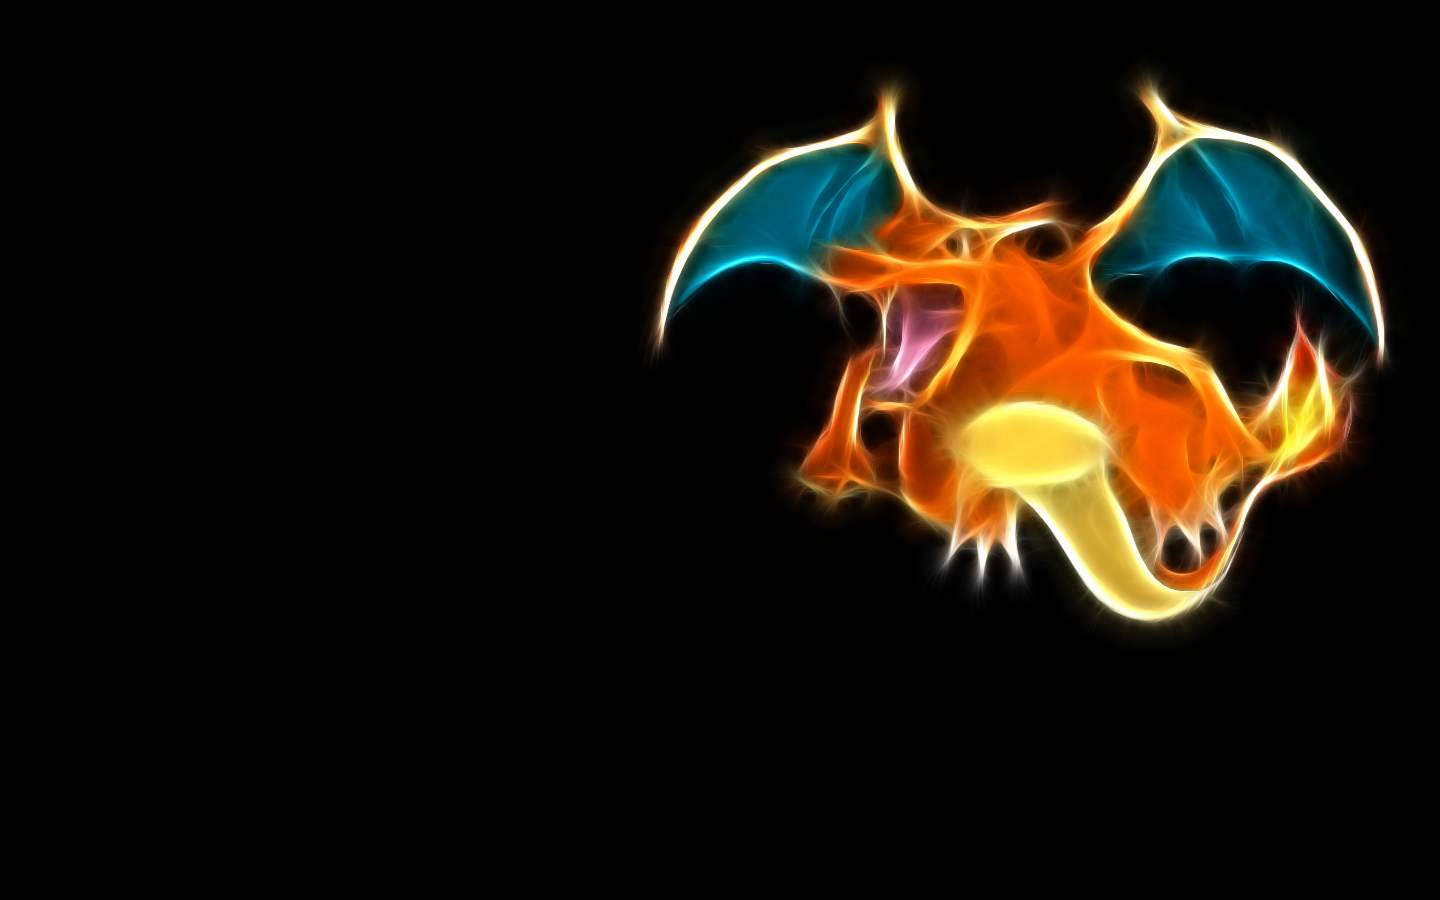 Pokemon Charizard Wallpaper Image